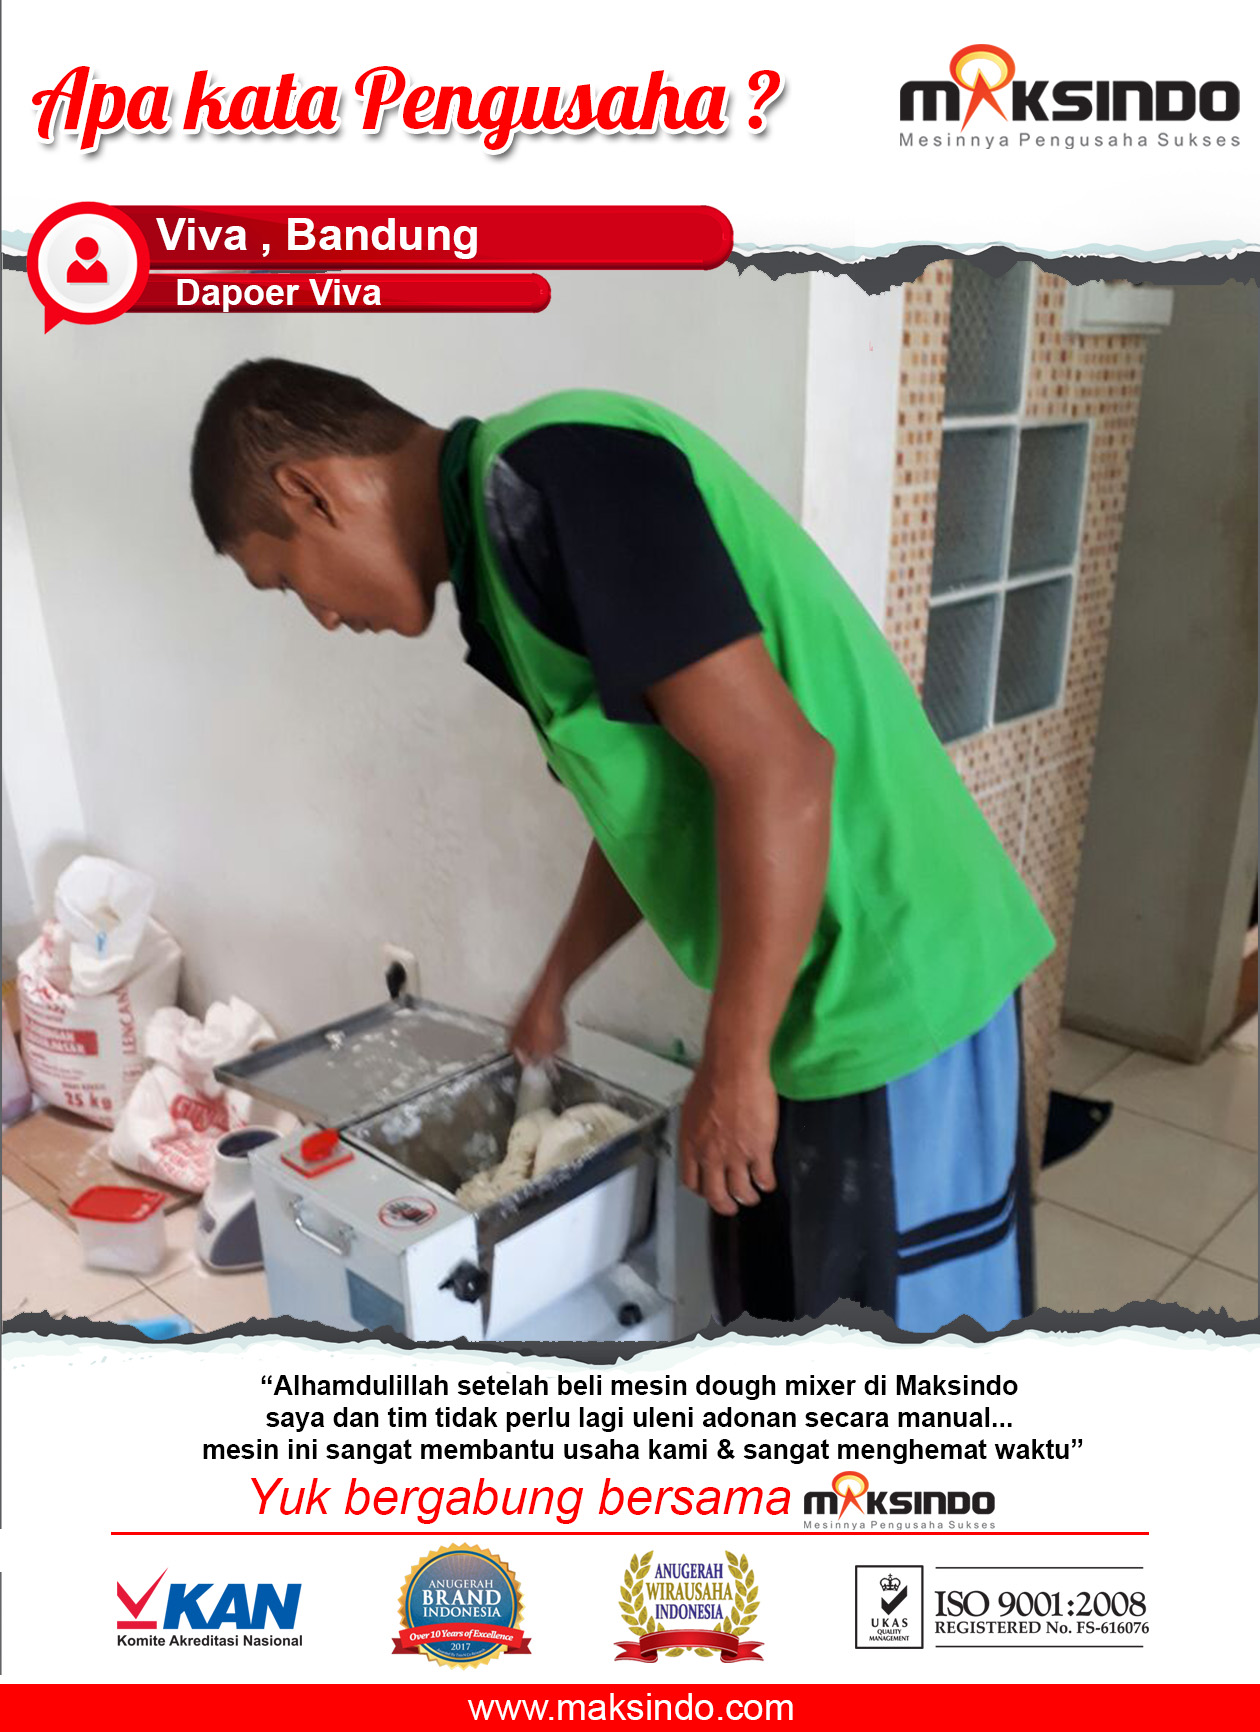 Dapoer Viva : Pengadukan Adonan Makin Cepat Dengan Mesin Dough Mixer